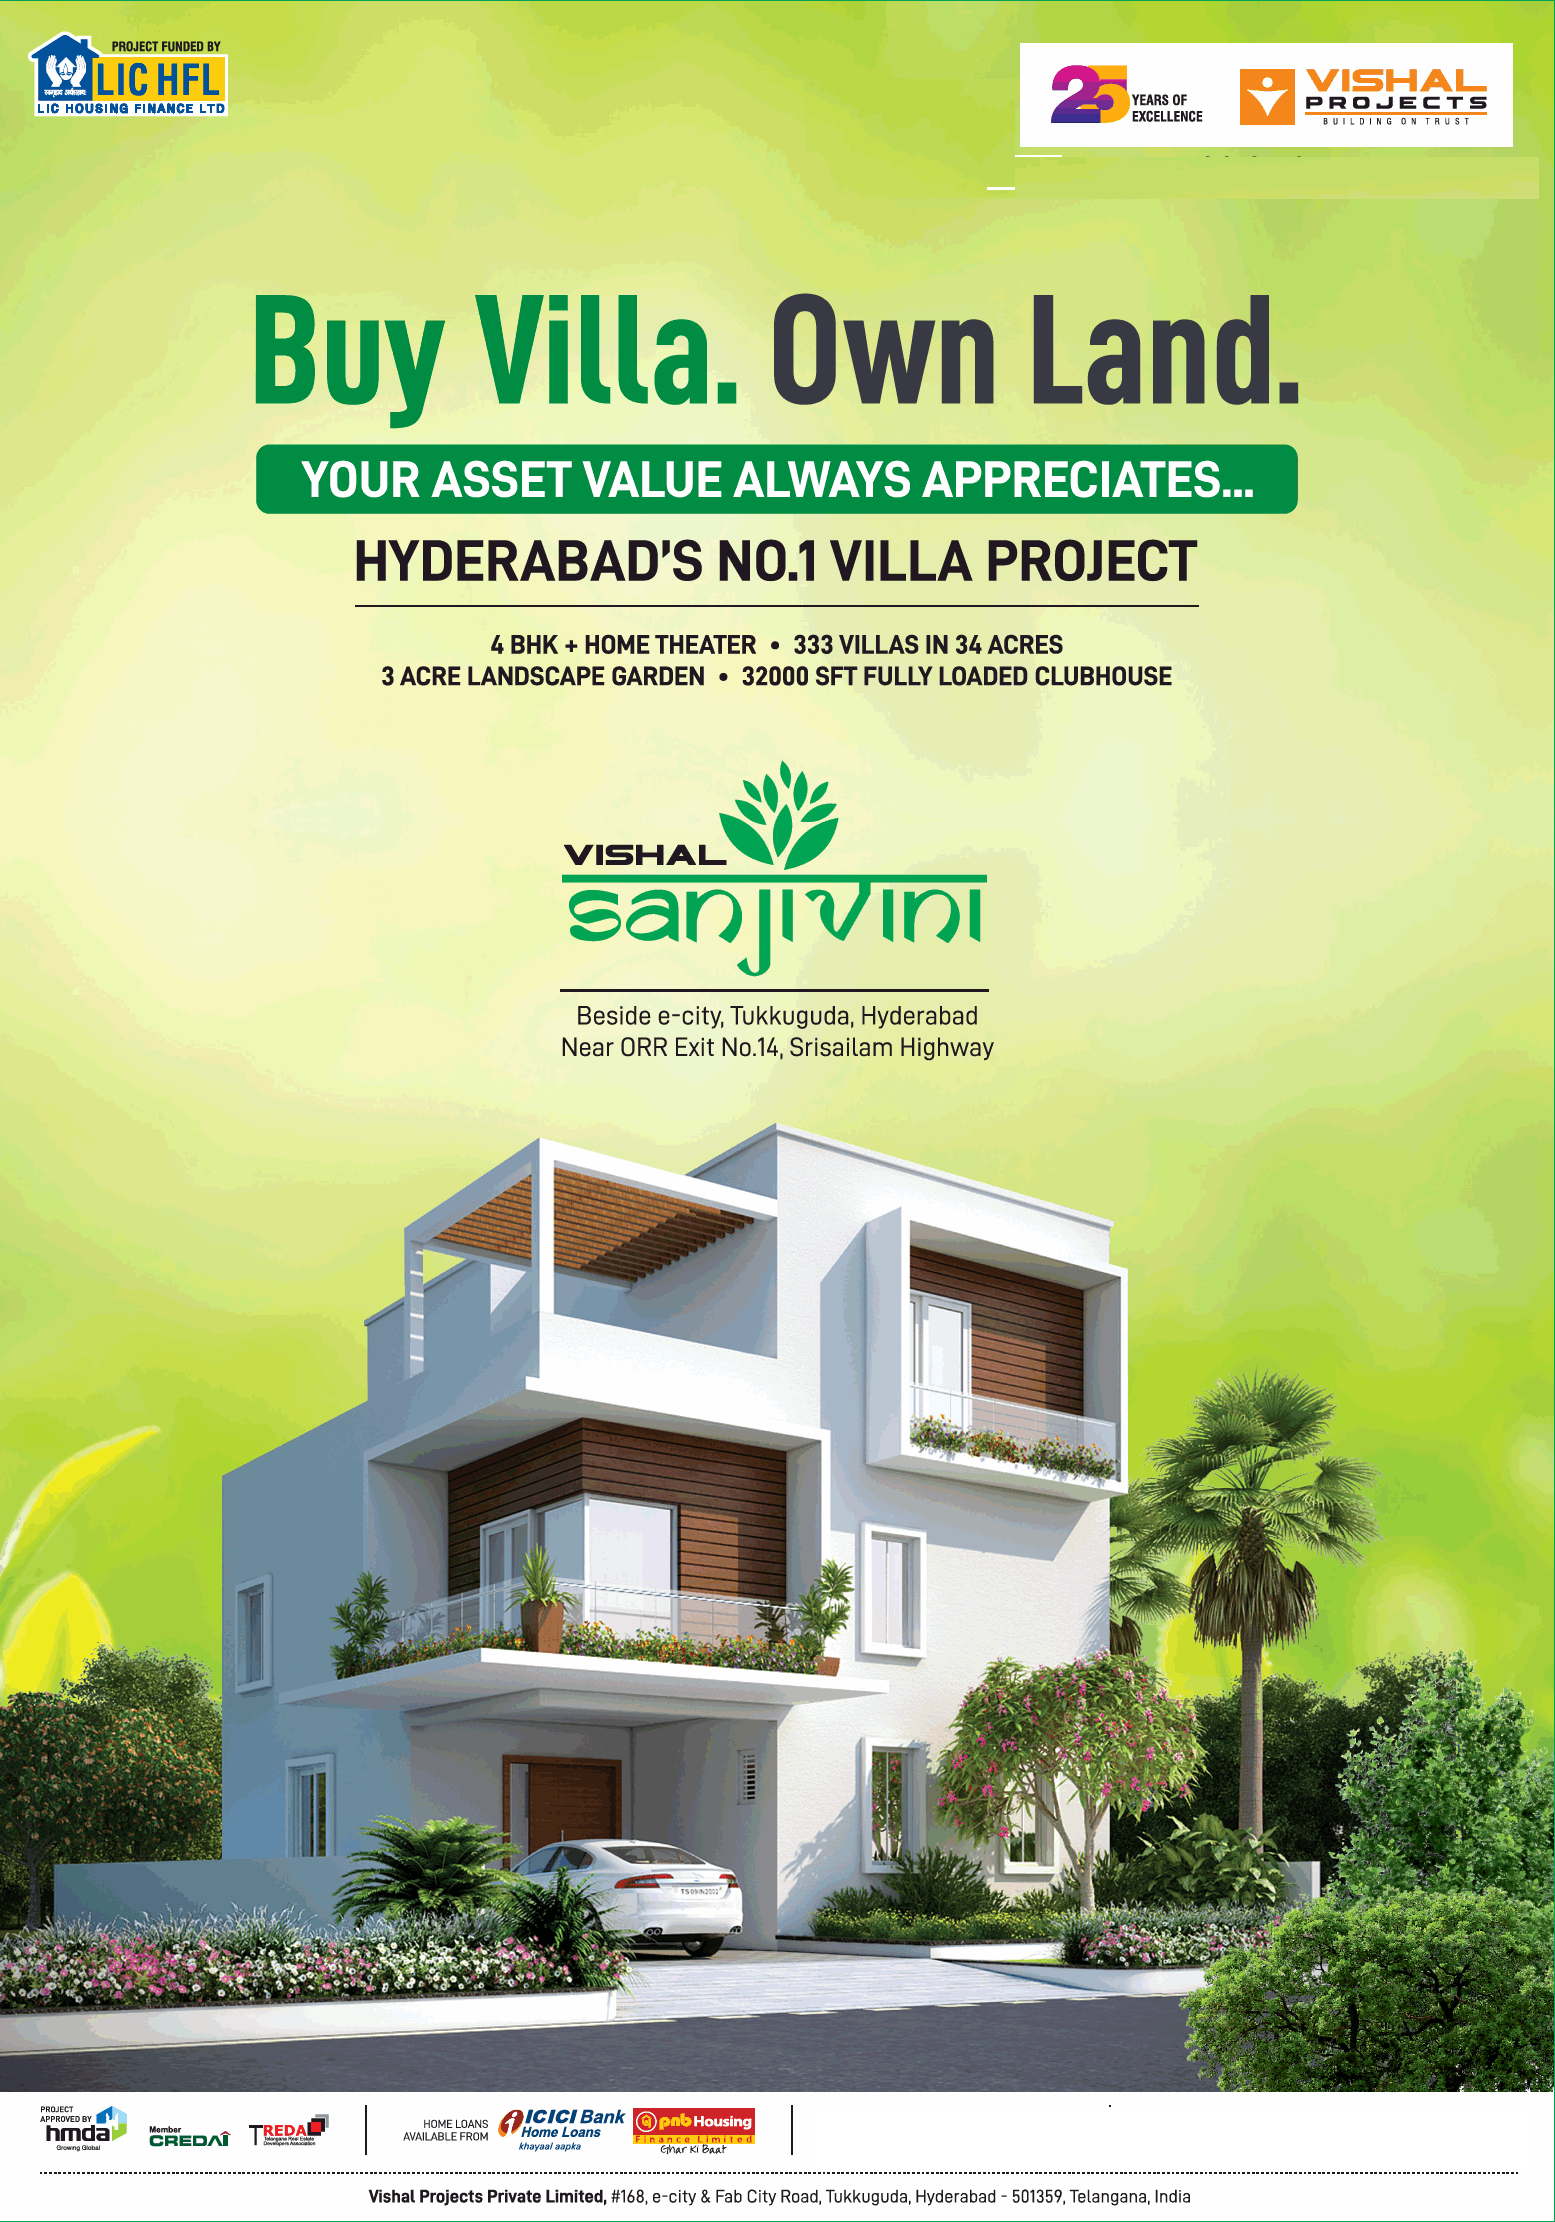 Book 4 BHK villa at Vishal Sanjivini, Hyderabad Update